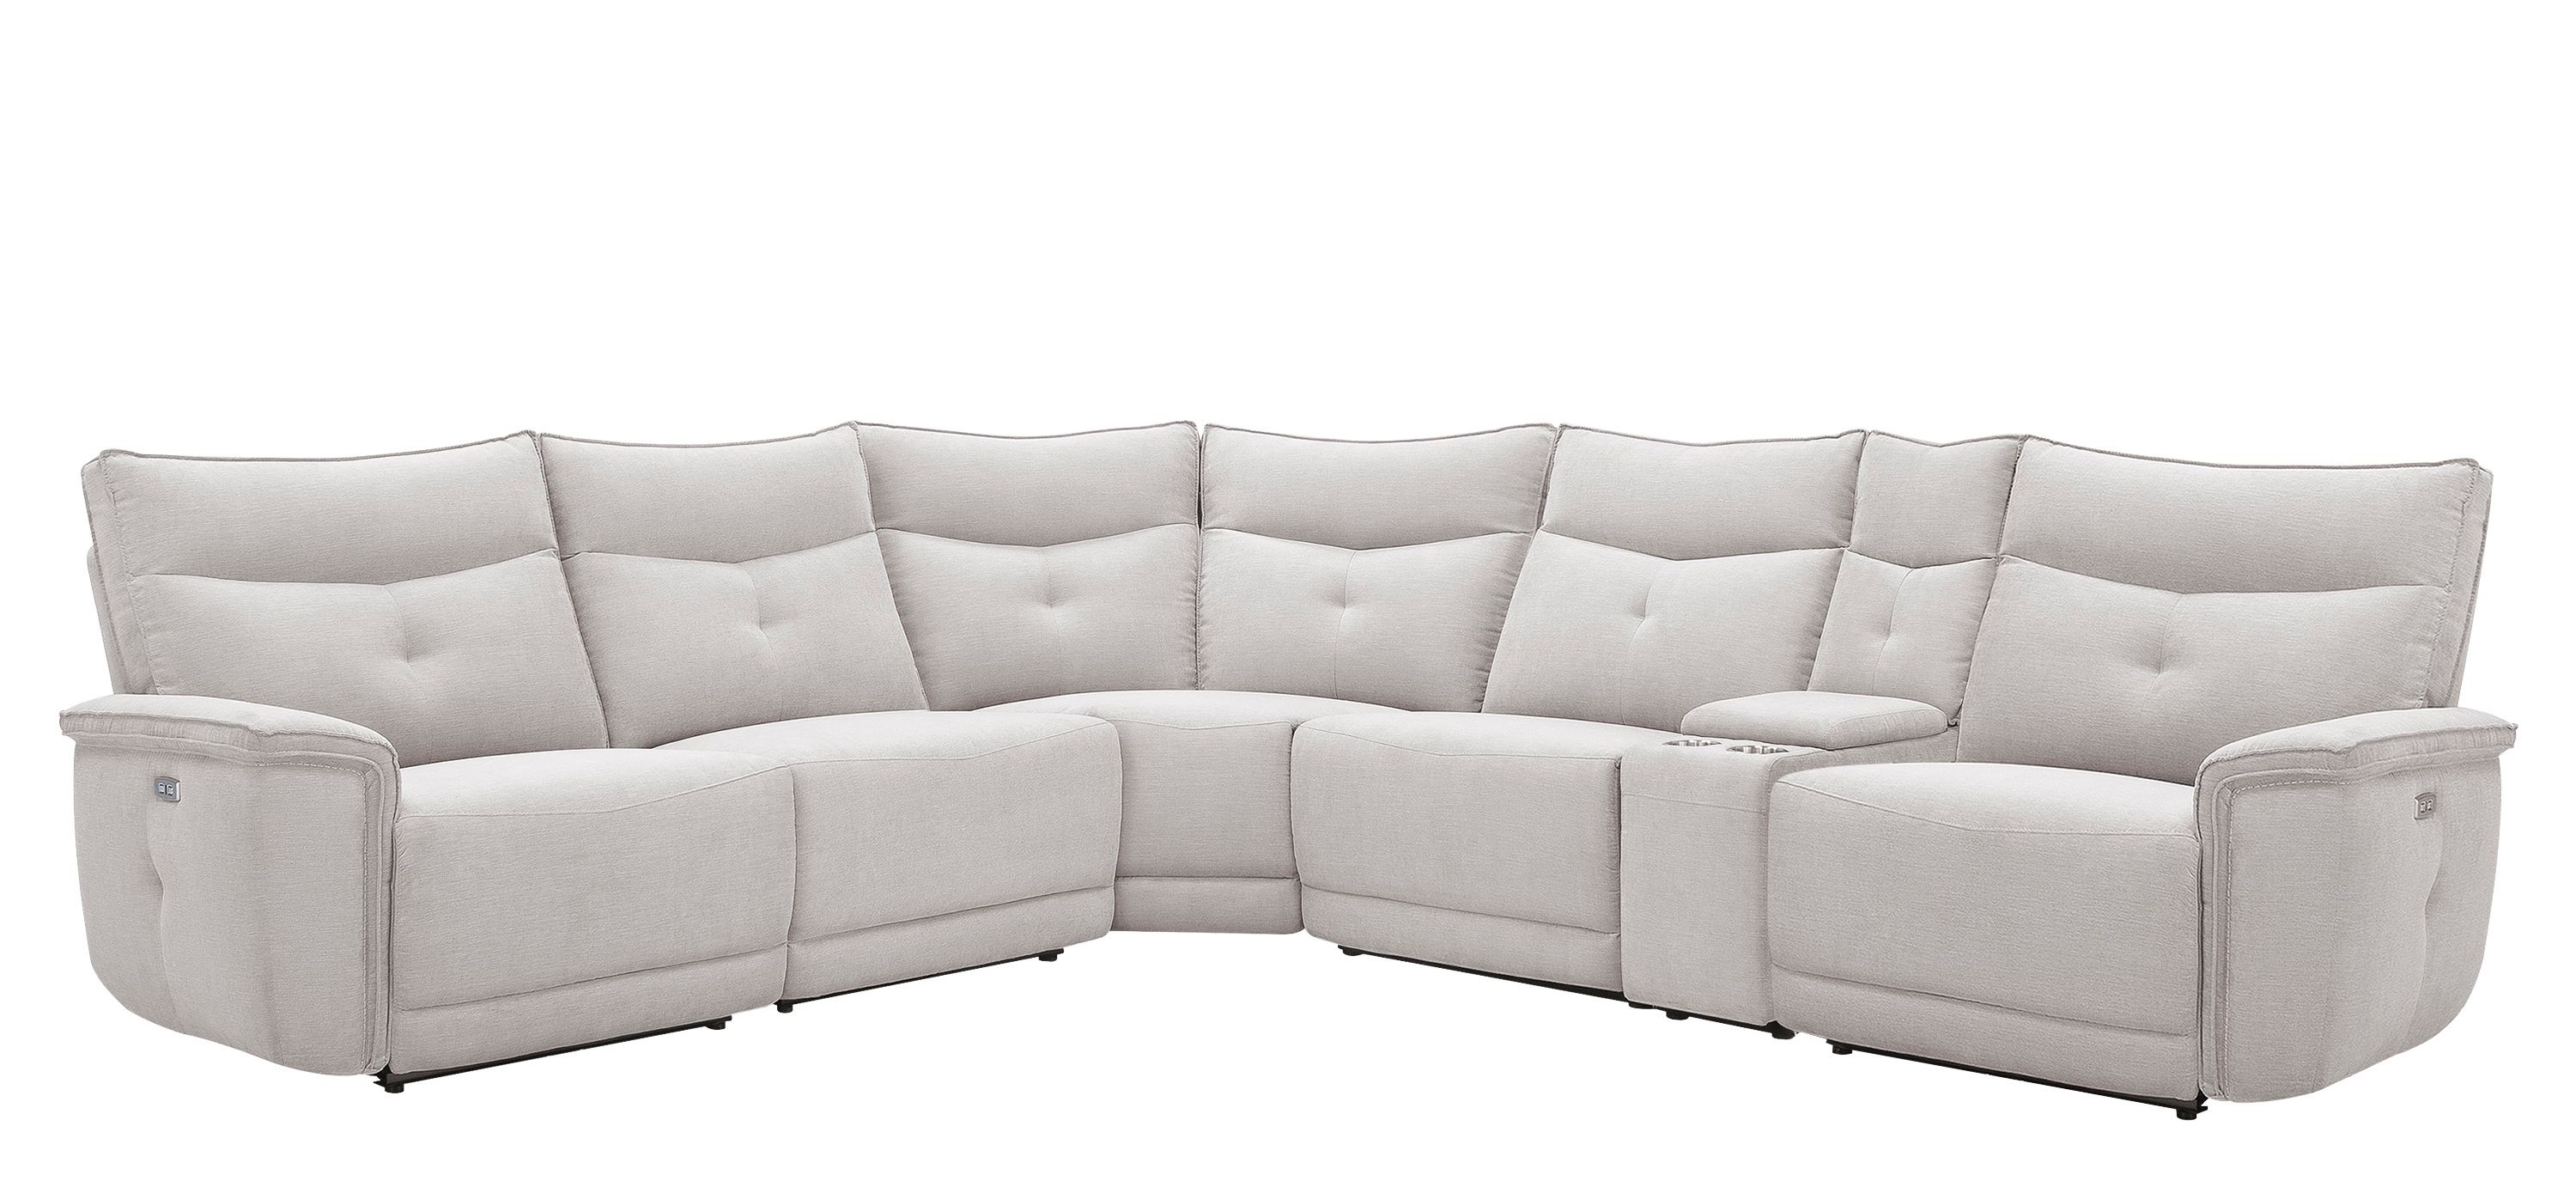 Graceland 6-pc. Sectional Sofa w/Power Headrest